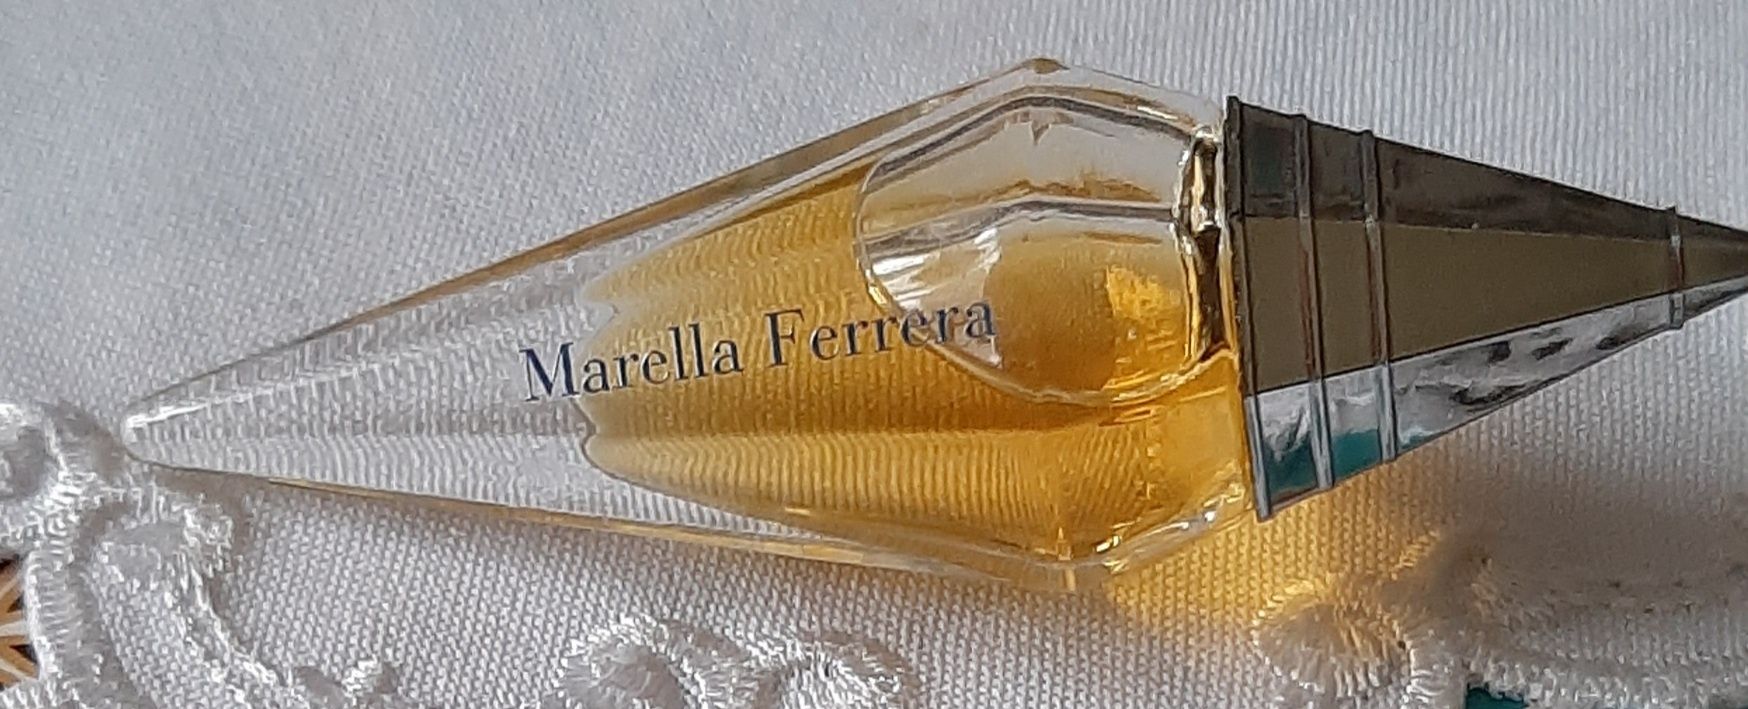 Marella Ferrera edp 4 ml, miniaturka, vintage